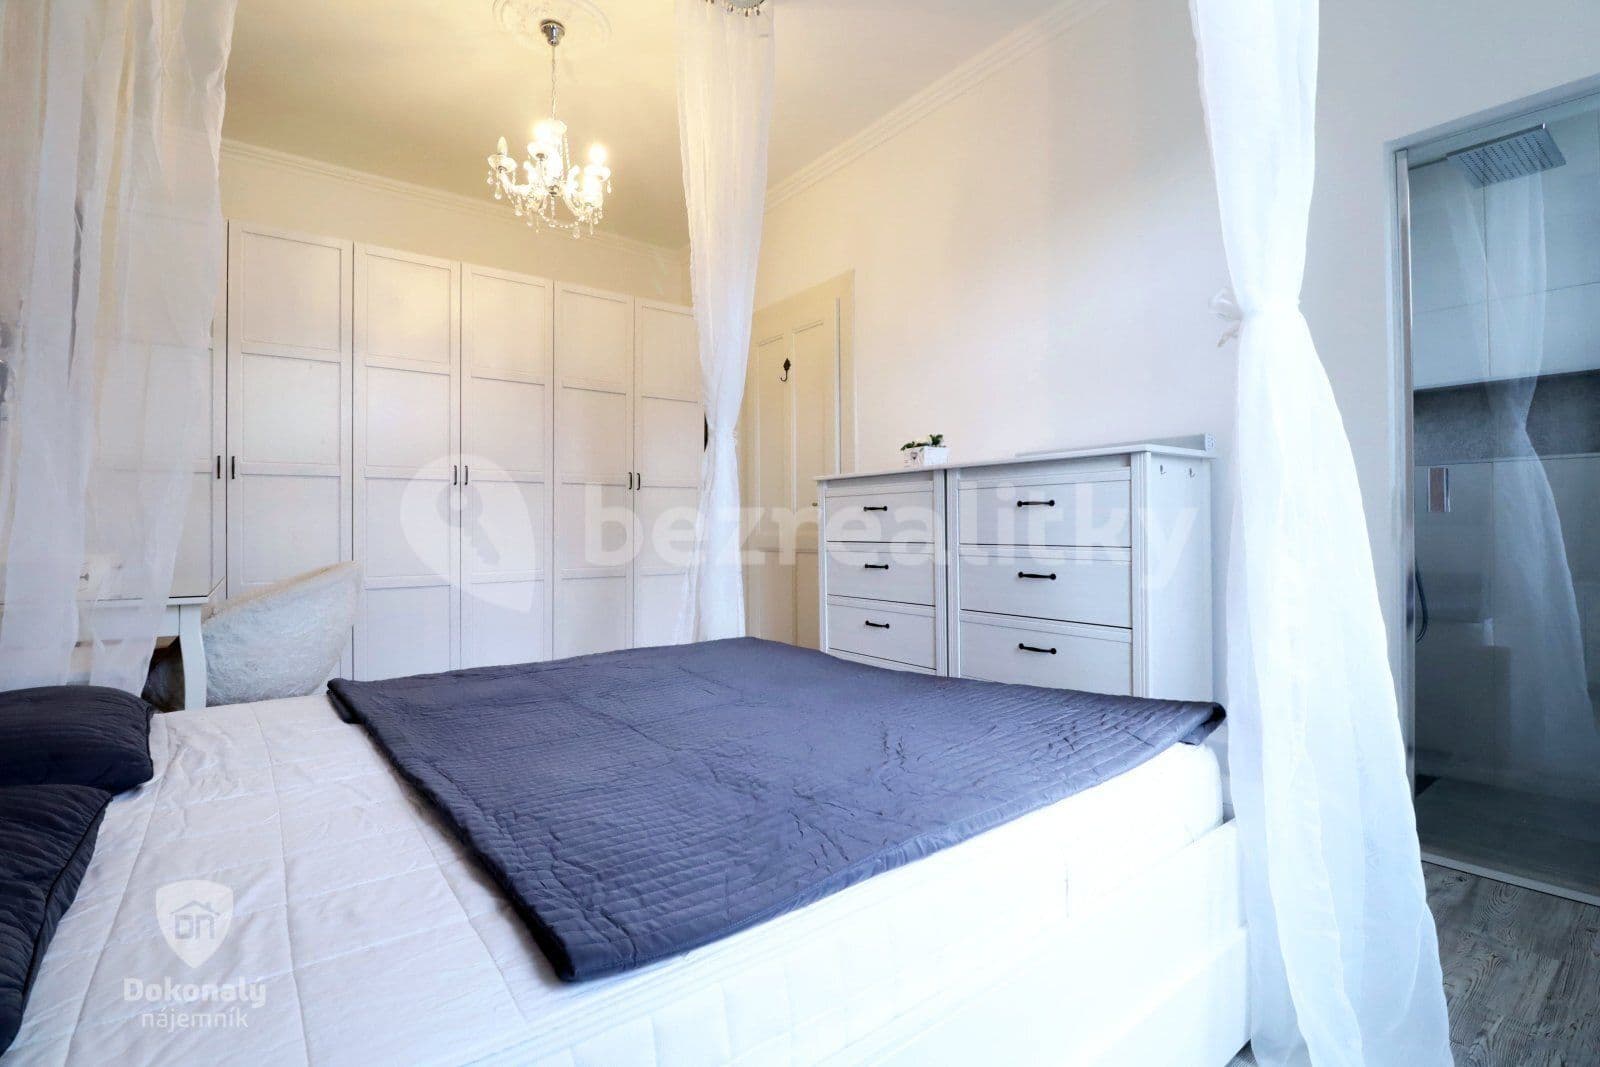 2 bedroom with open-plan kitchen flat to rent, 94 m², Fibichova, Prague, Prague